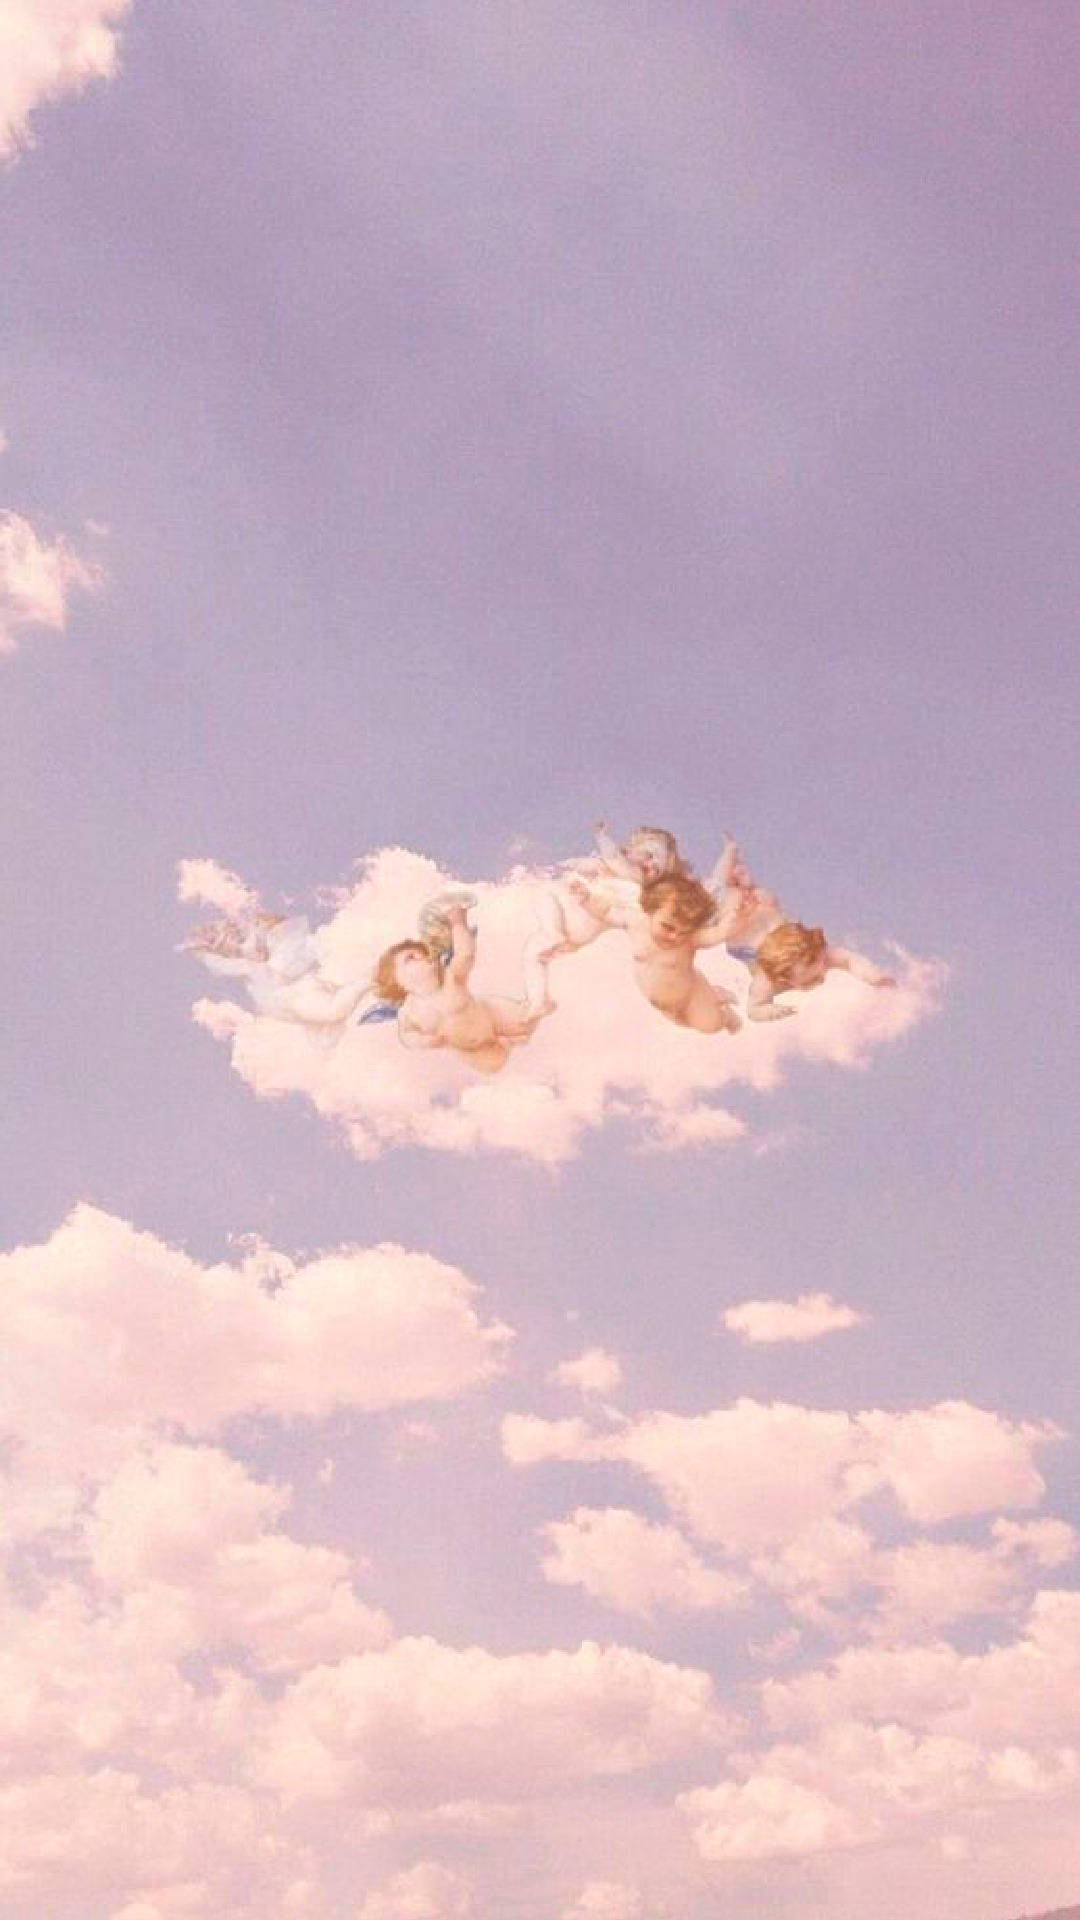 Download Vintage Aesthetic Clouds Cherub Angels Wallpaper